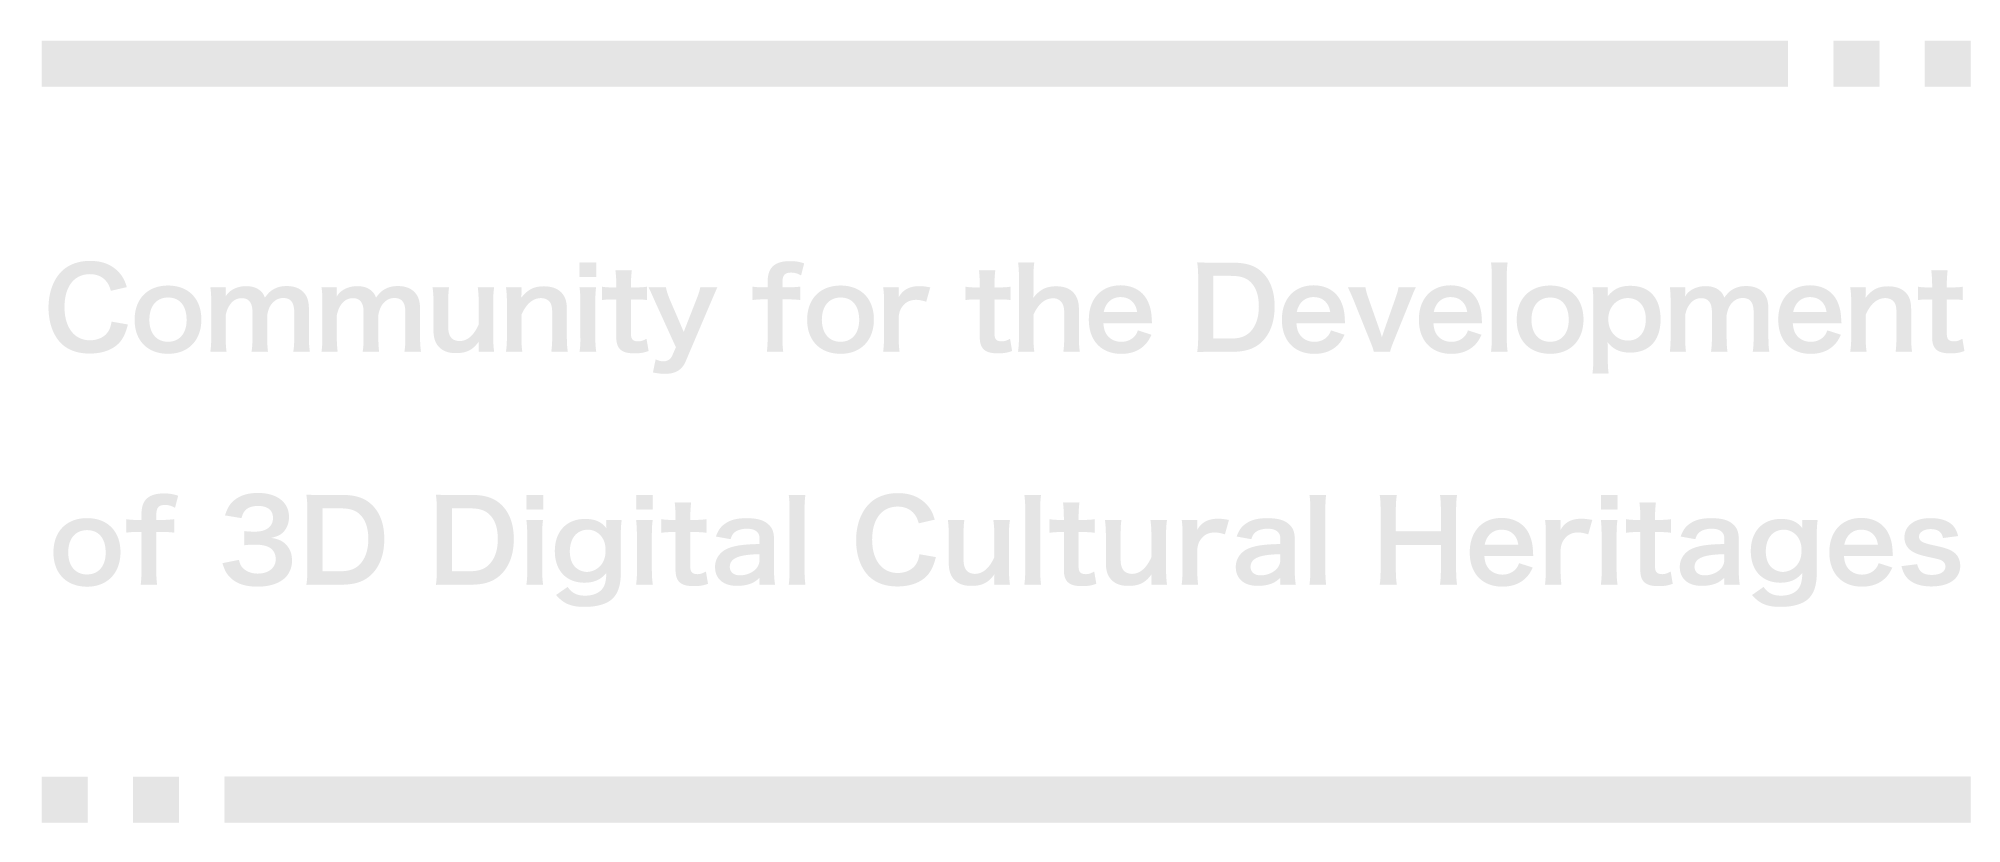 Community for Development of 3D Digital Cultural Heritages